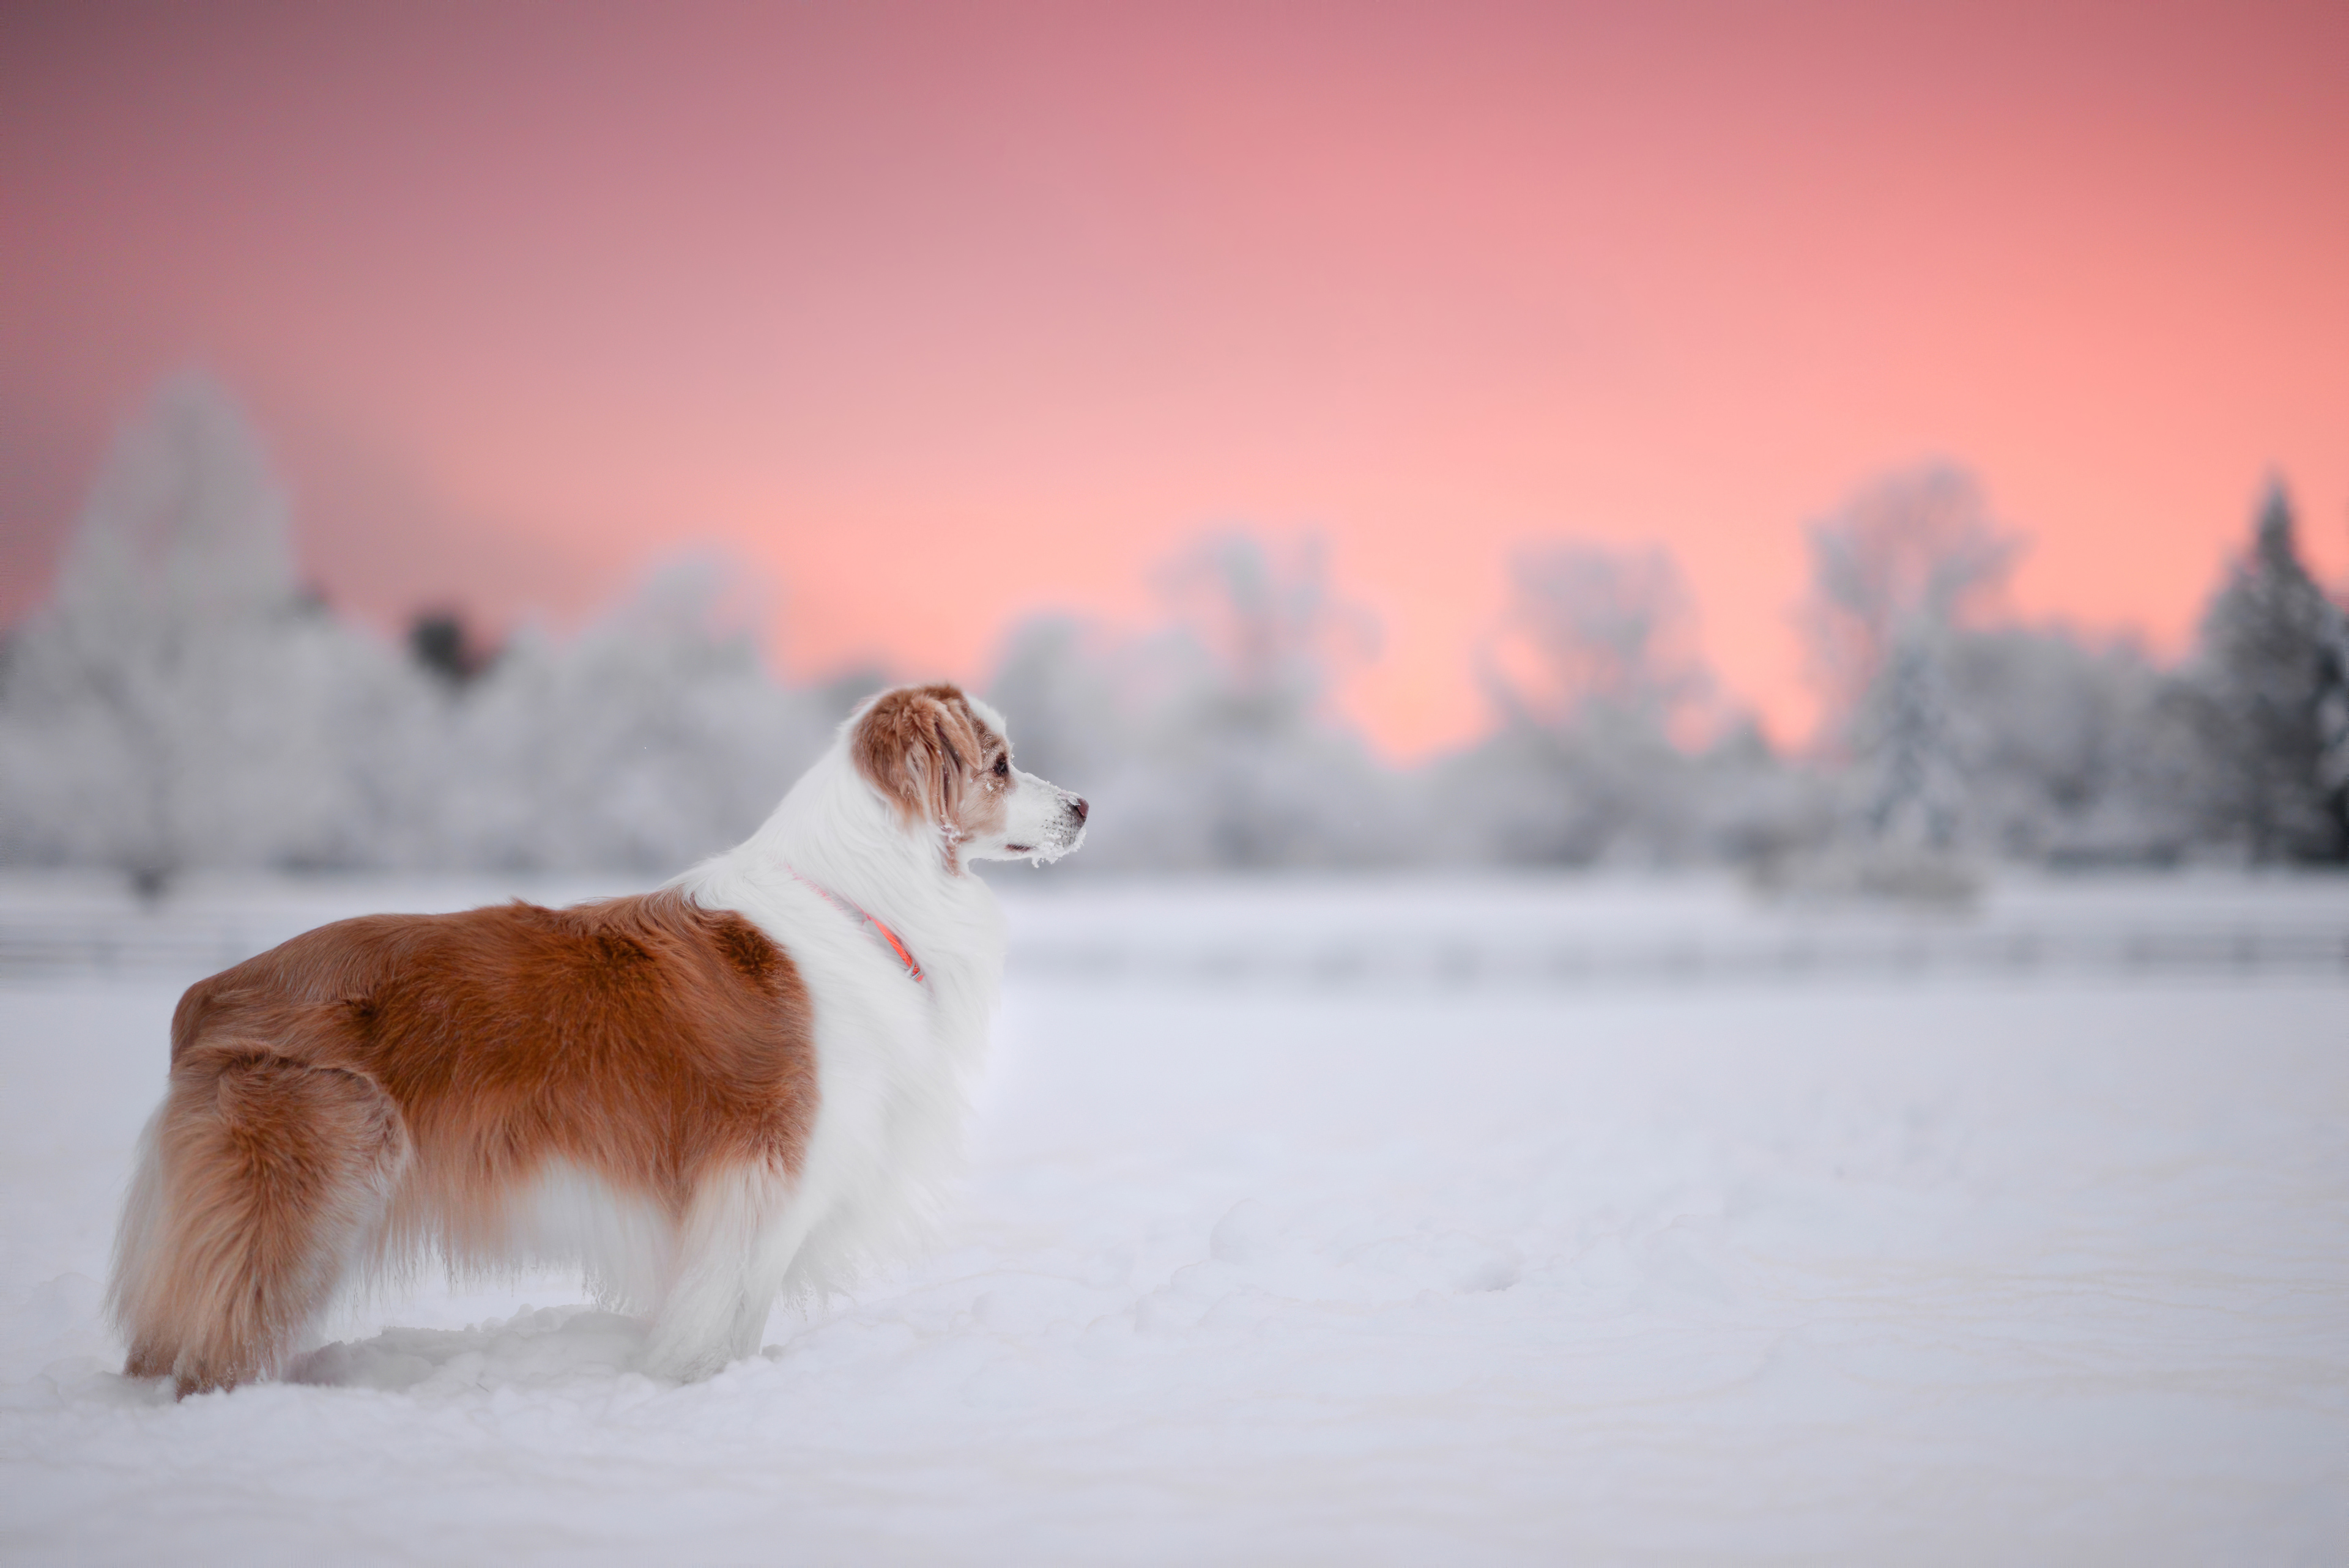 Dog in the snow Wallpaper 4k Ultra HD ID:5786